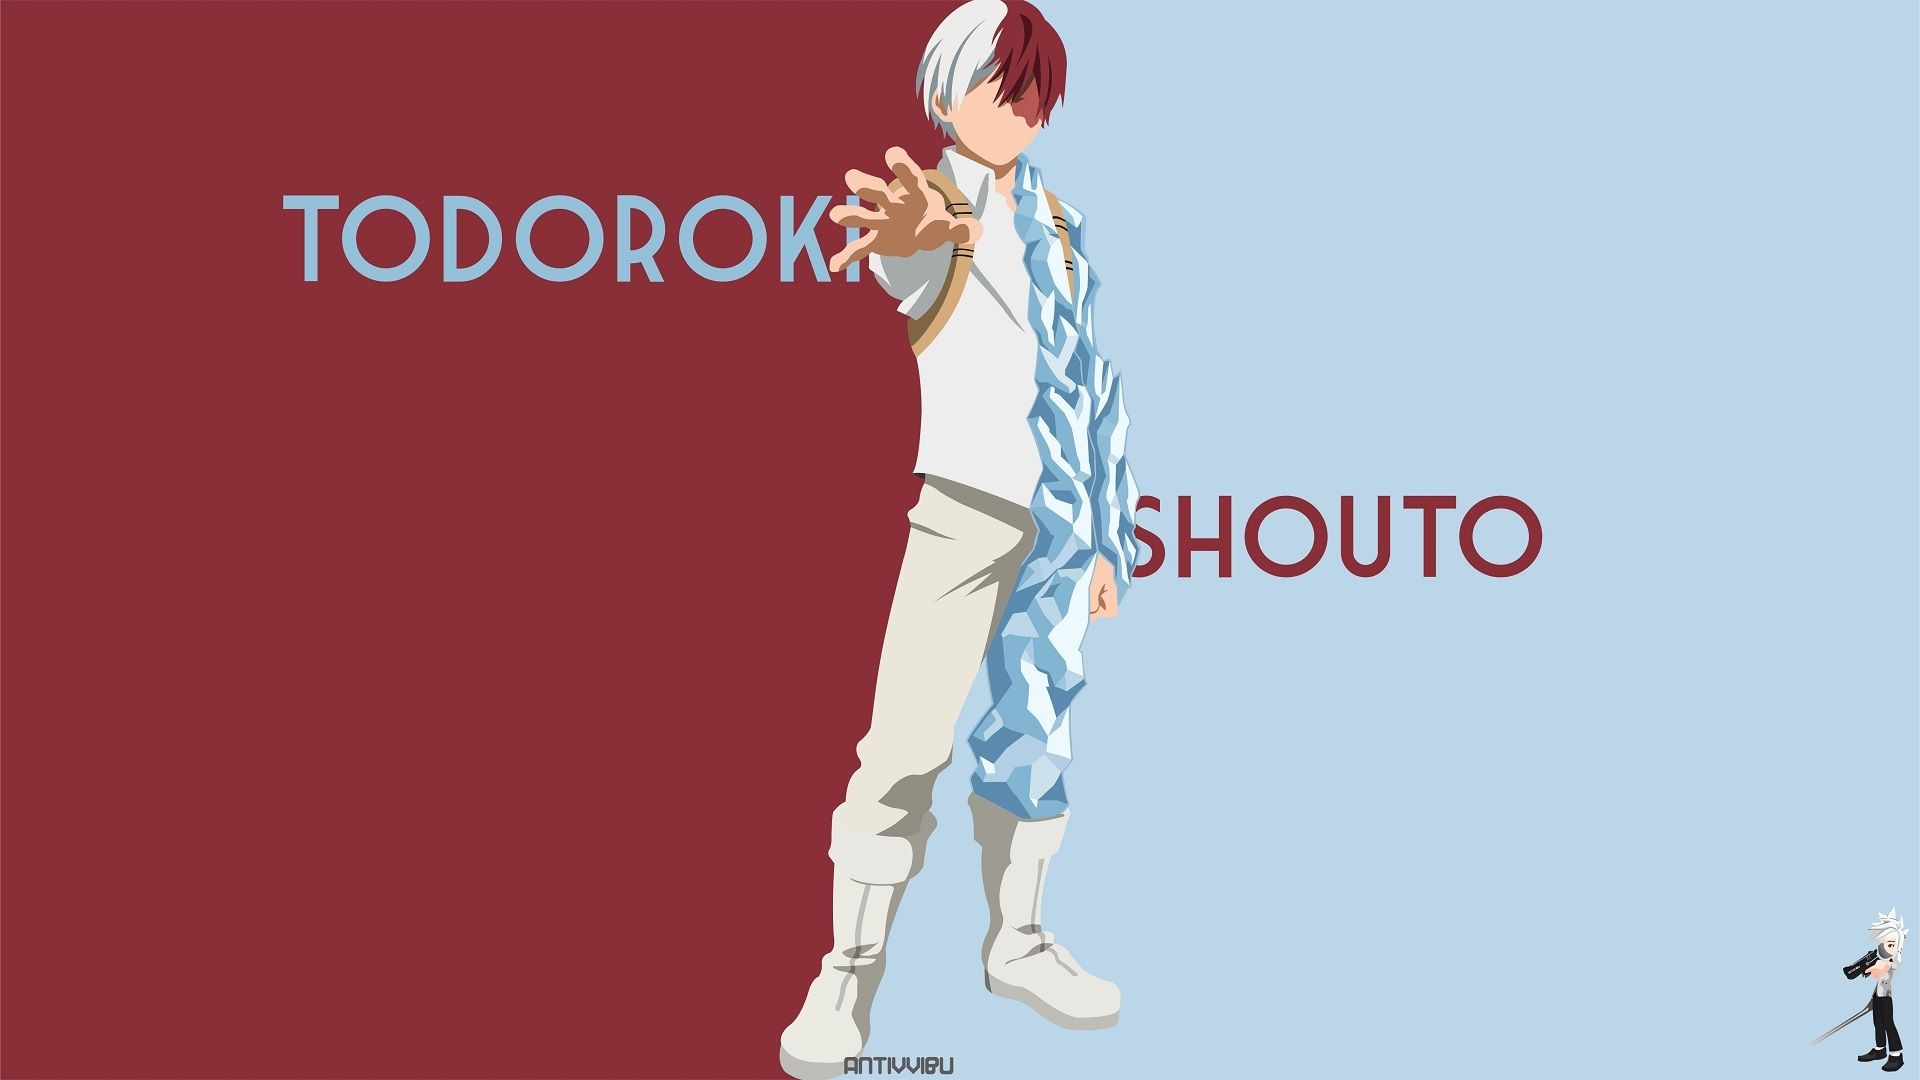 Shoto Todoroki Wallpaper, HD Anime 4K Wallpaper, Image, Photo and Background